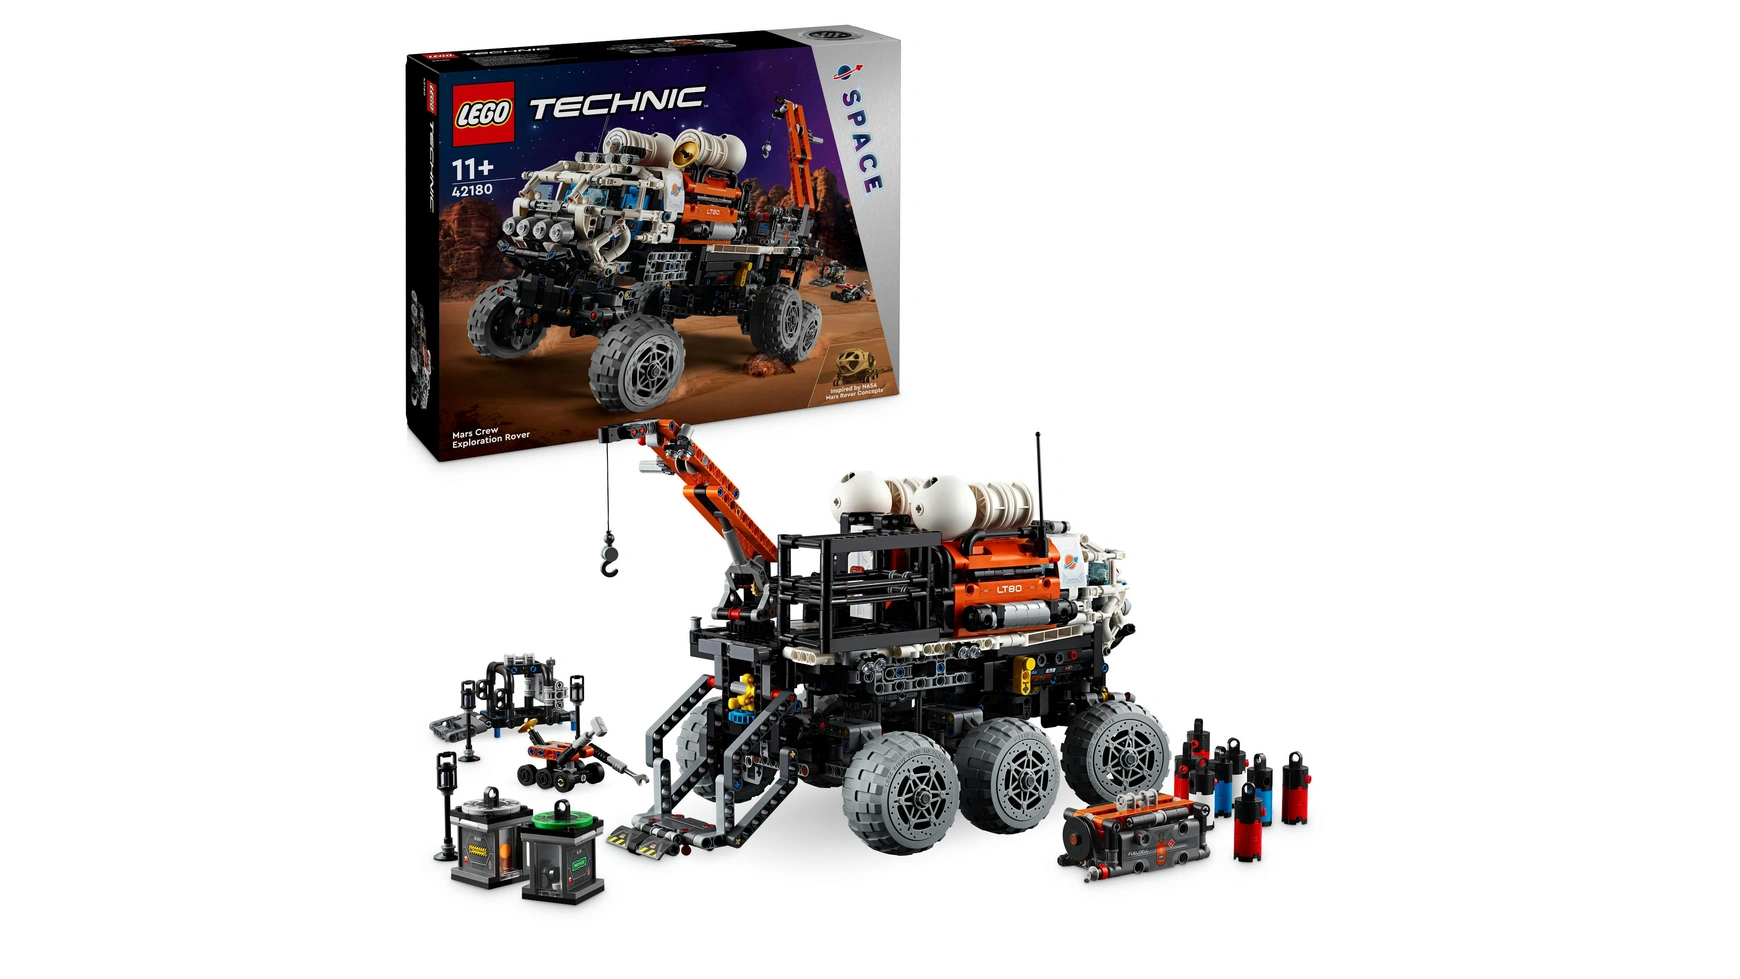 Lego Марсоход Technic Mars Exploration Rover, игровой набор space exploration apollo 11 lunar lander saturn v duilding block 10266 new creator technic expert lepinblock playmobil kids toys